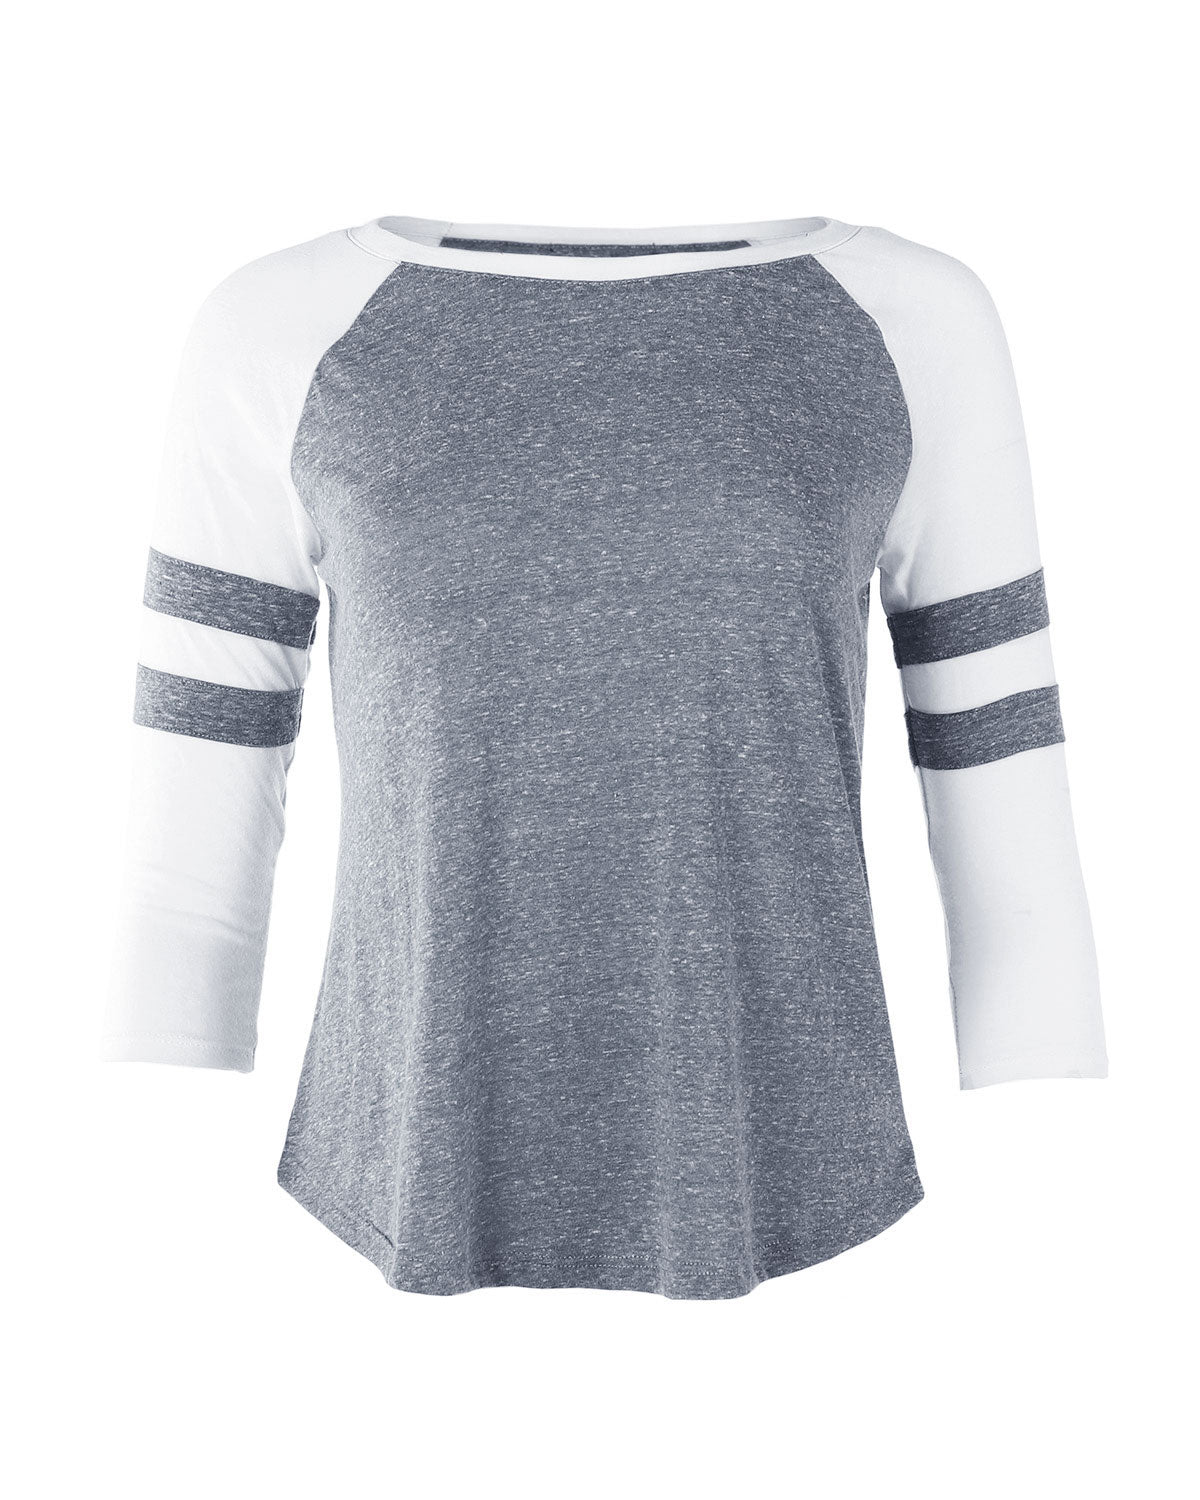 Colorblock 3/4 Sleeve Cotton Baseball T-Shirt